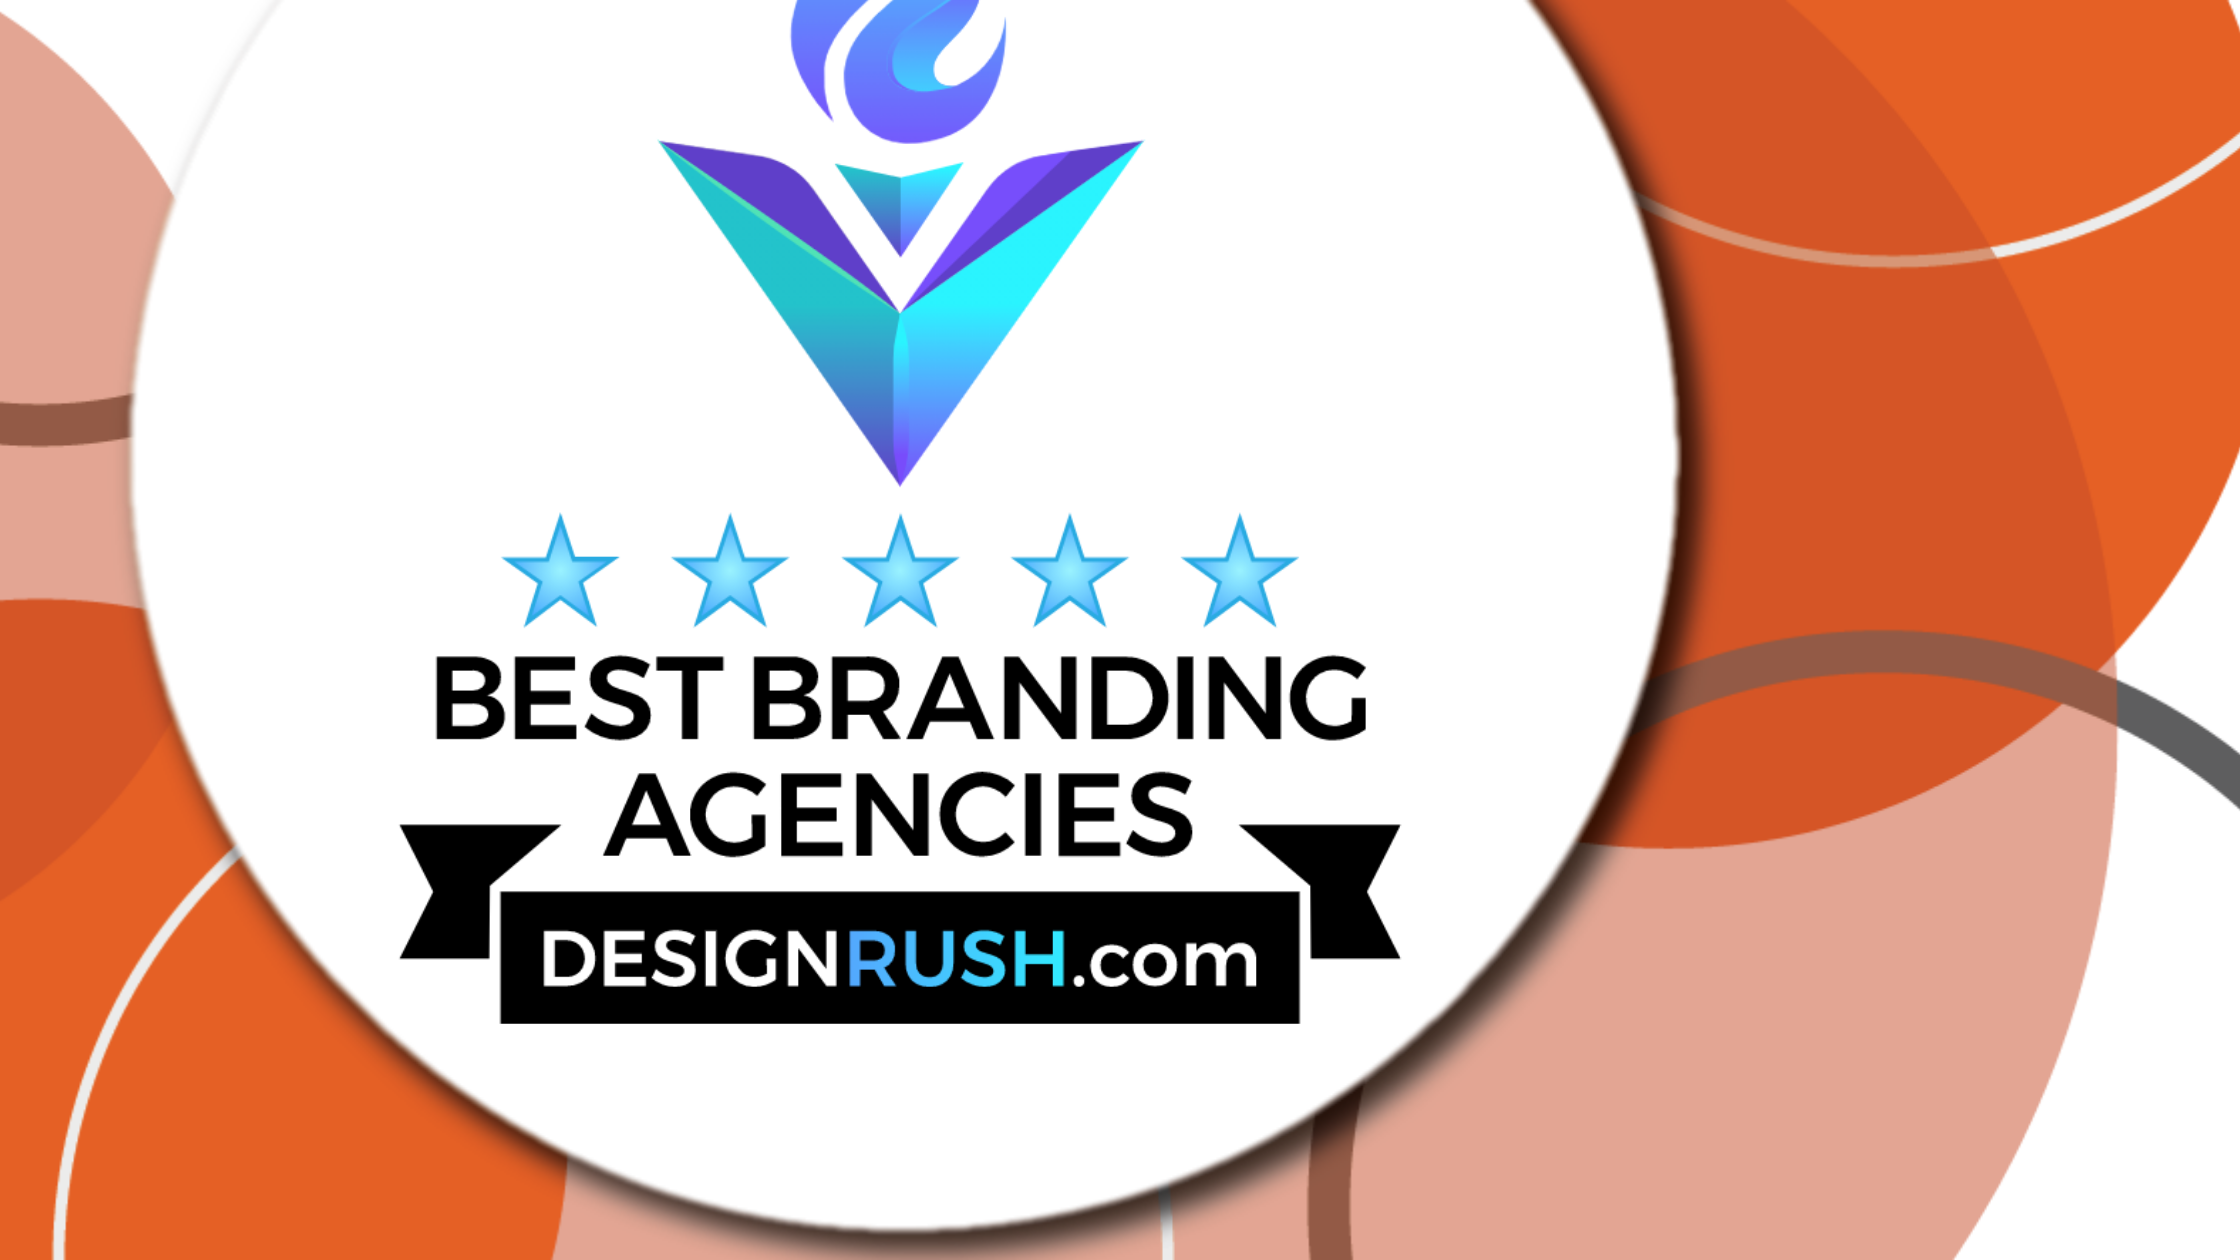 Burkhart Marketing Of Indianapolis Named Top Ranked Branding Agency